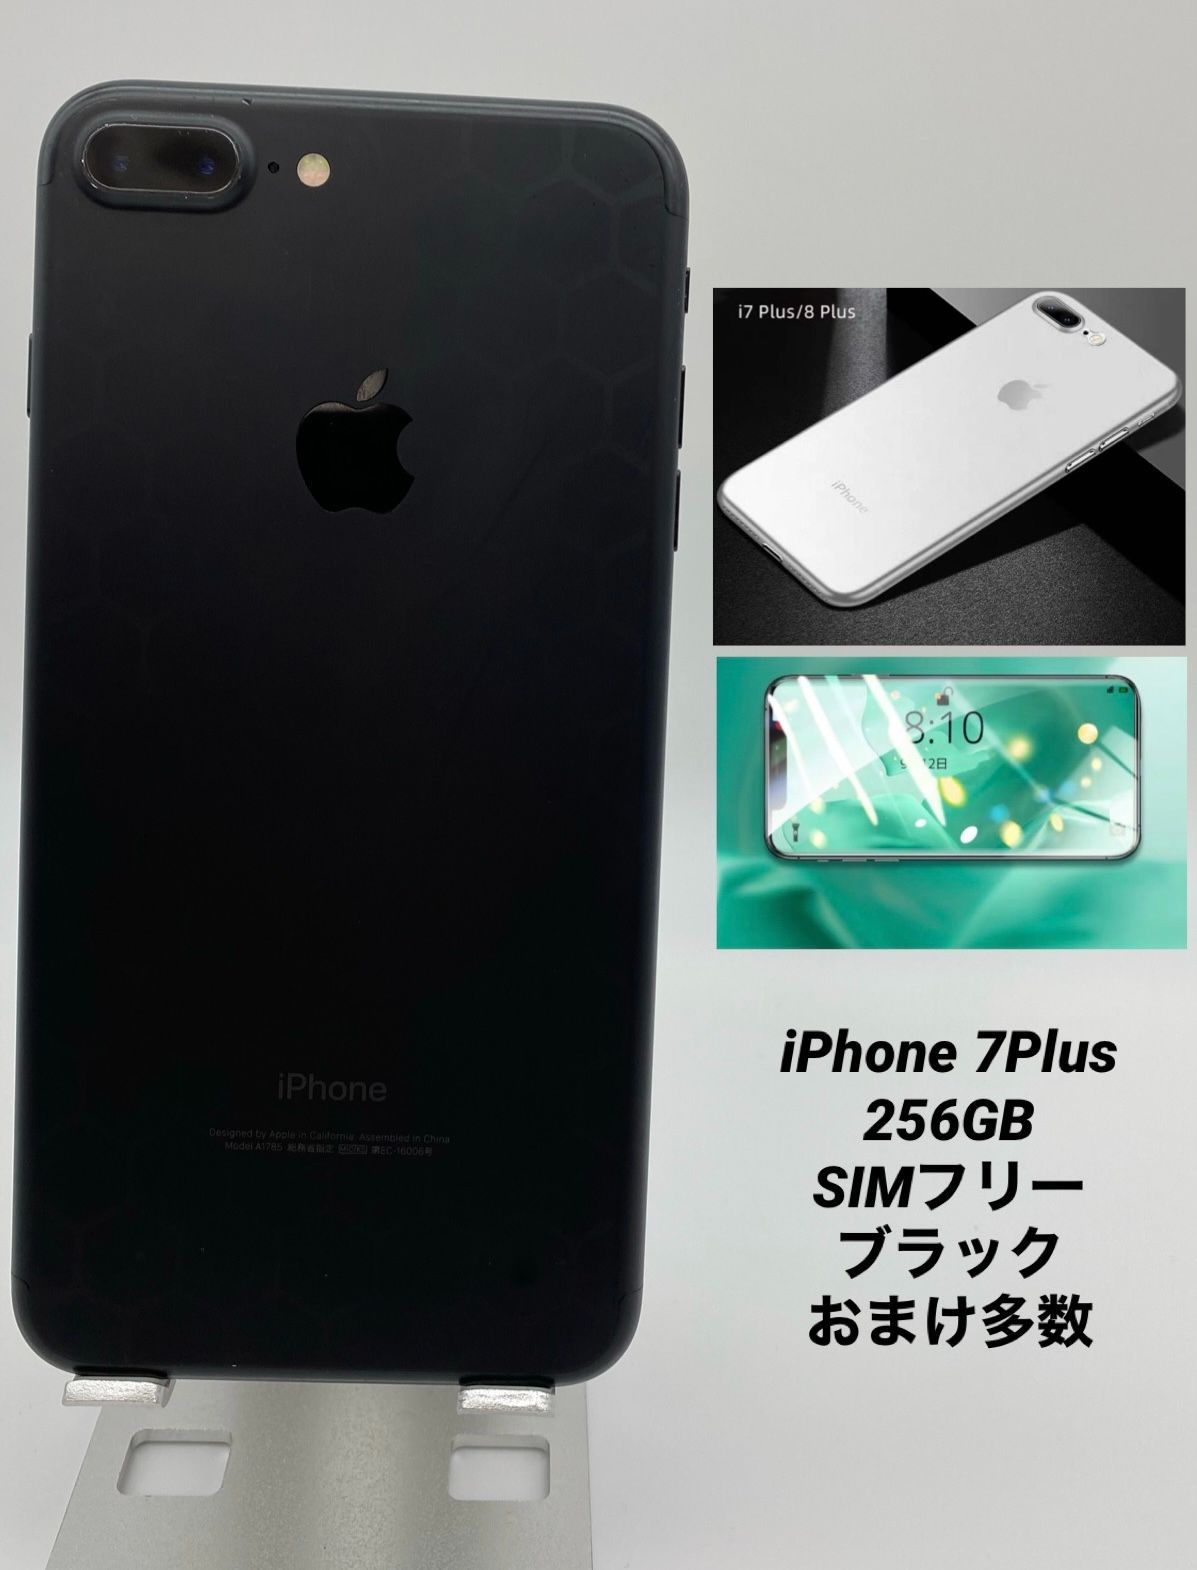 iPhone 7Plus 256GB/ストア版シムフリー/大容量新品BT 008 - メルカリ